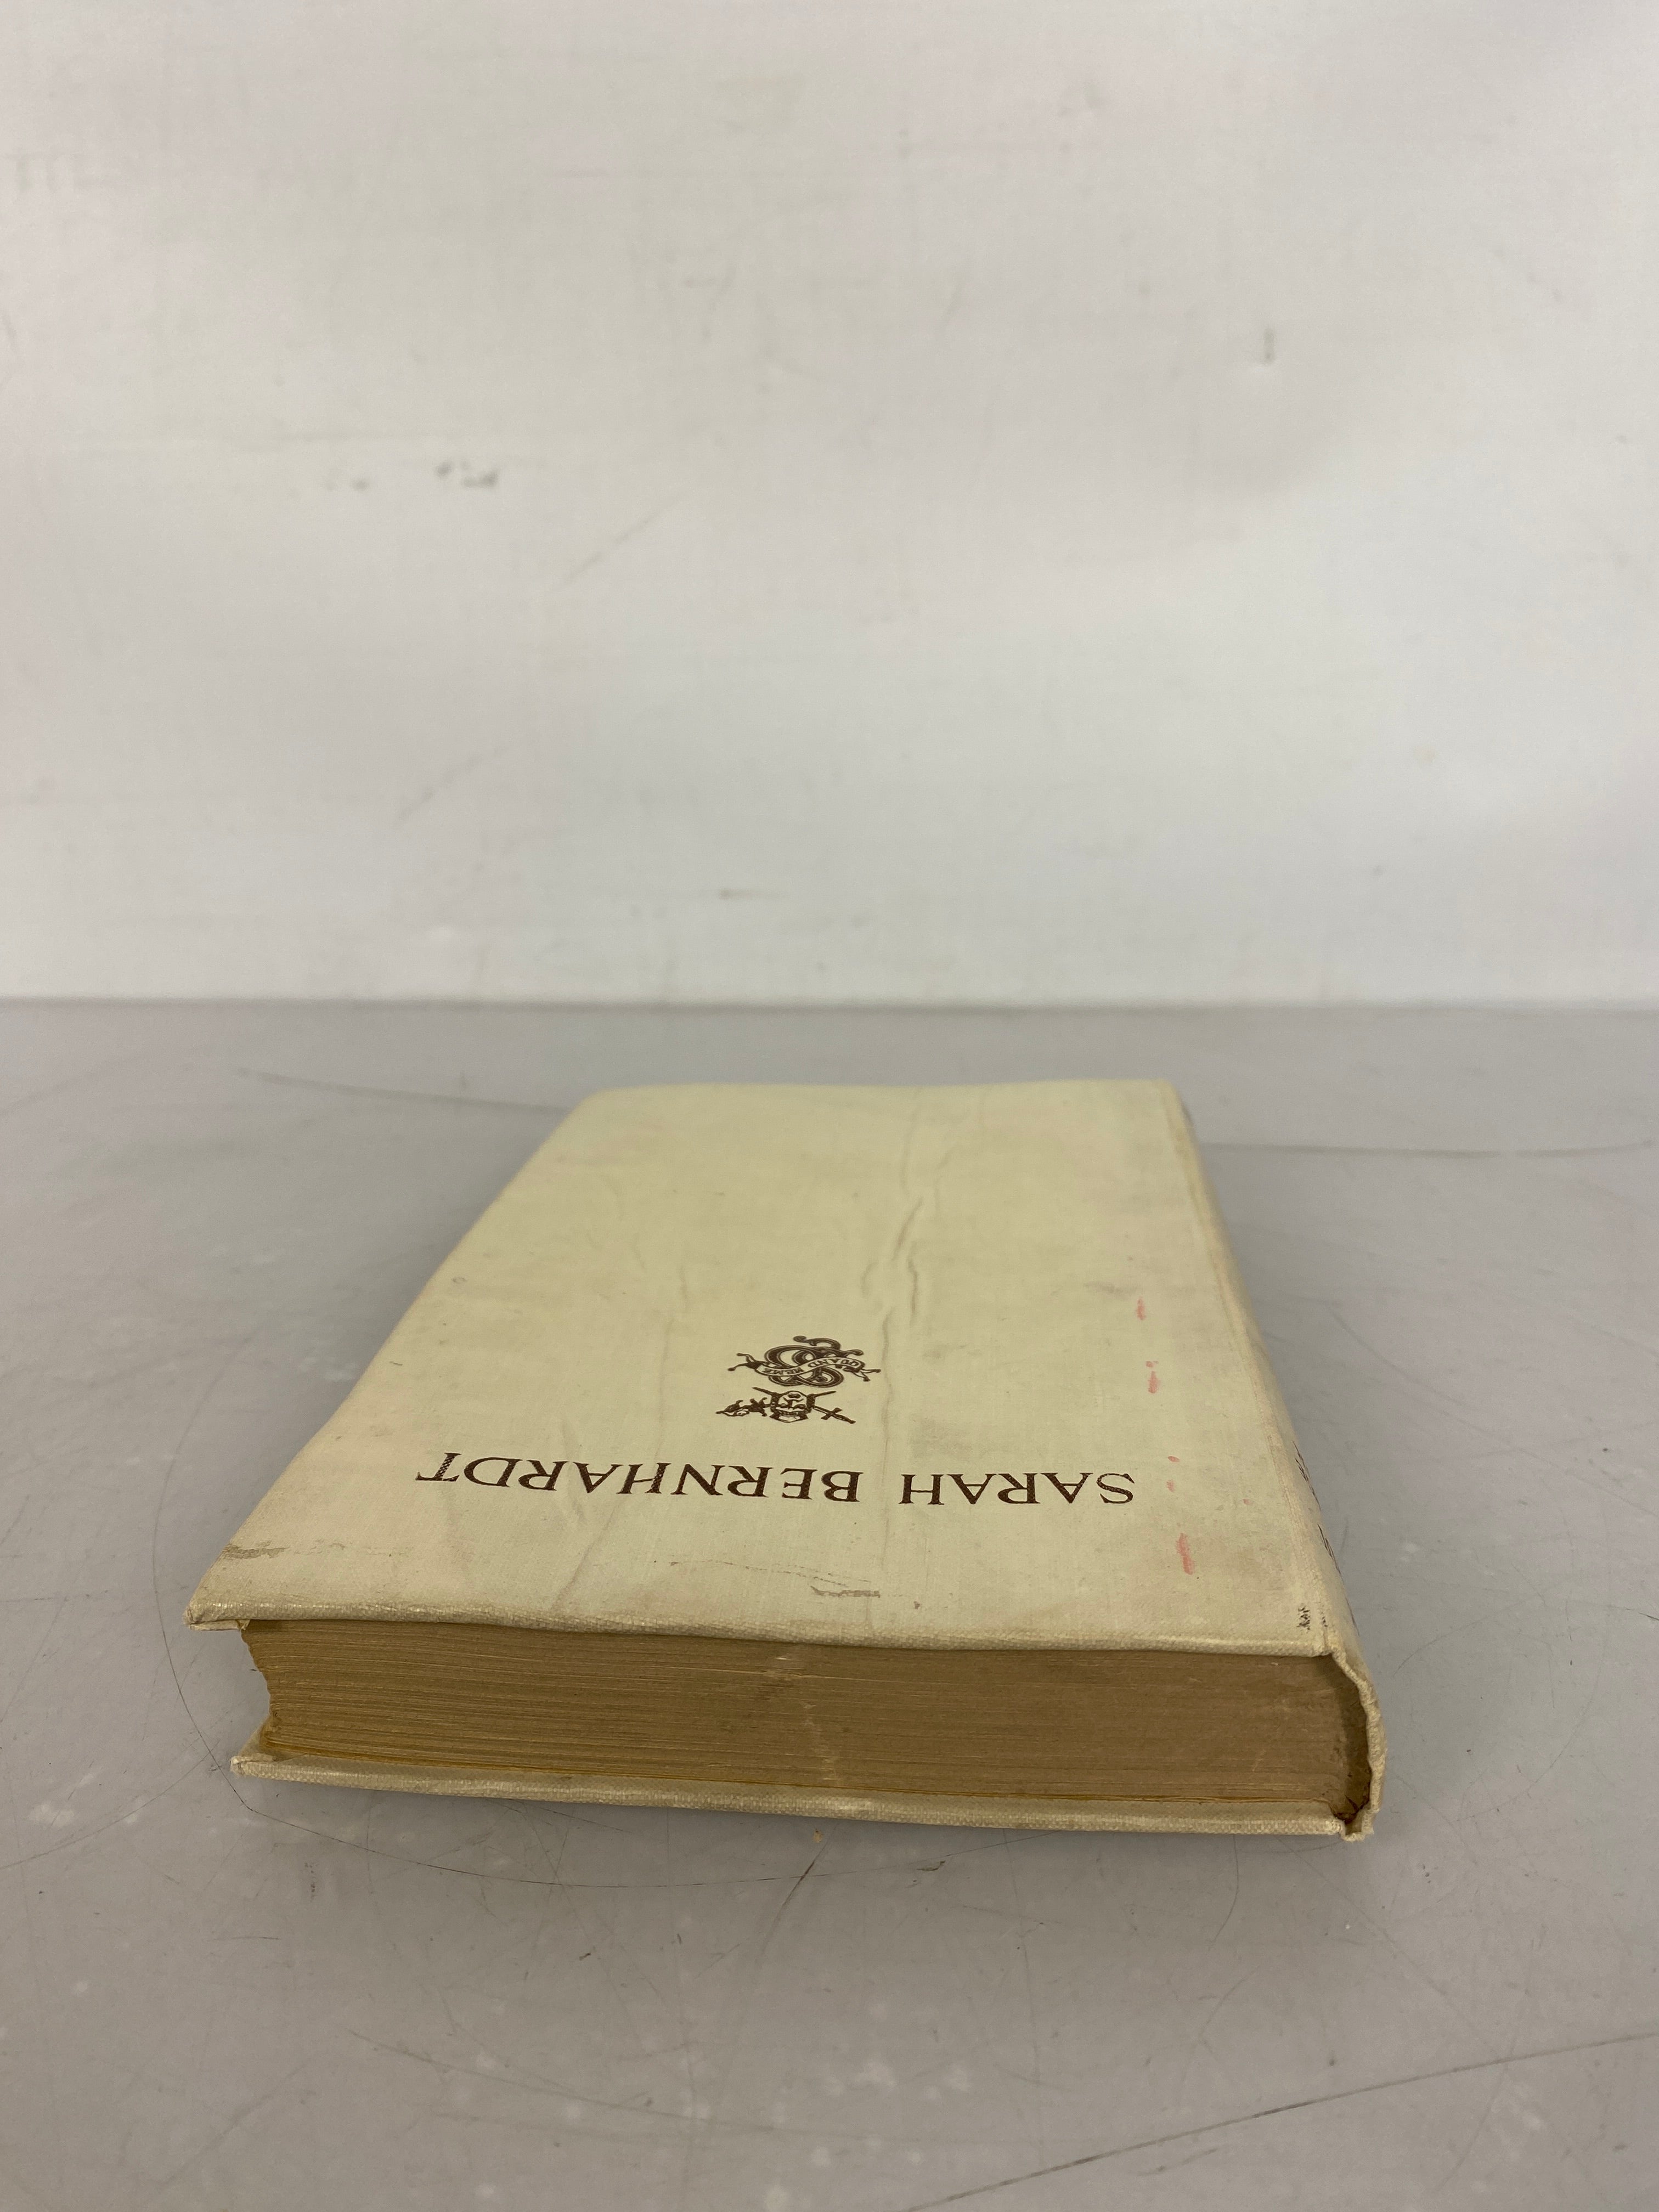 Sarah Bernhardt First Edition 1923 C by George Arthur HC